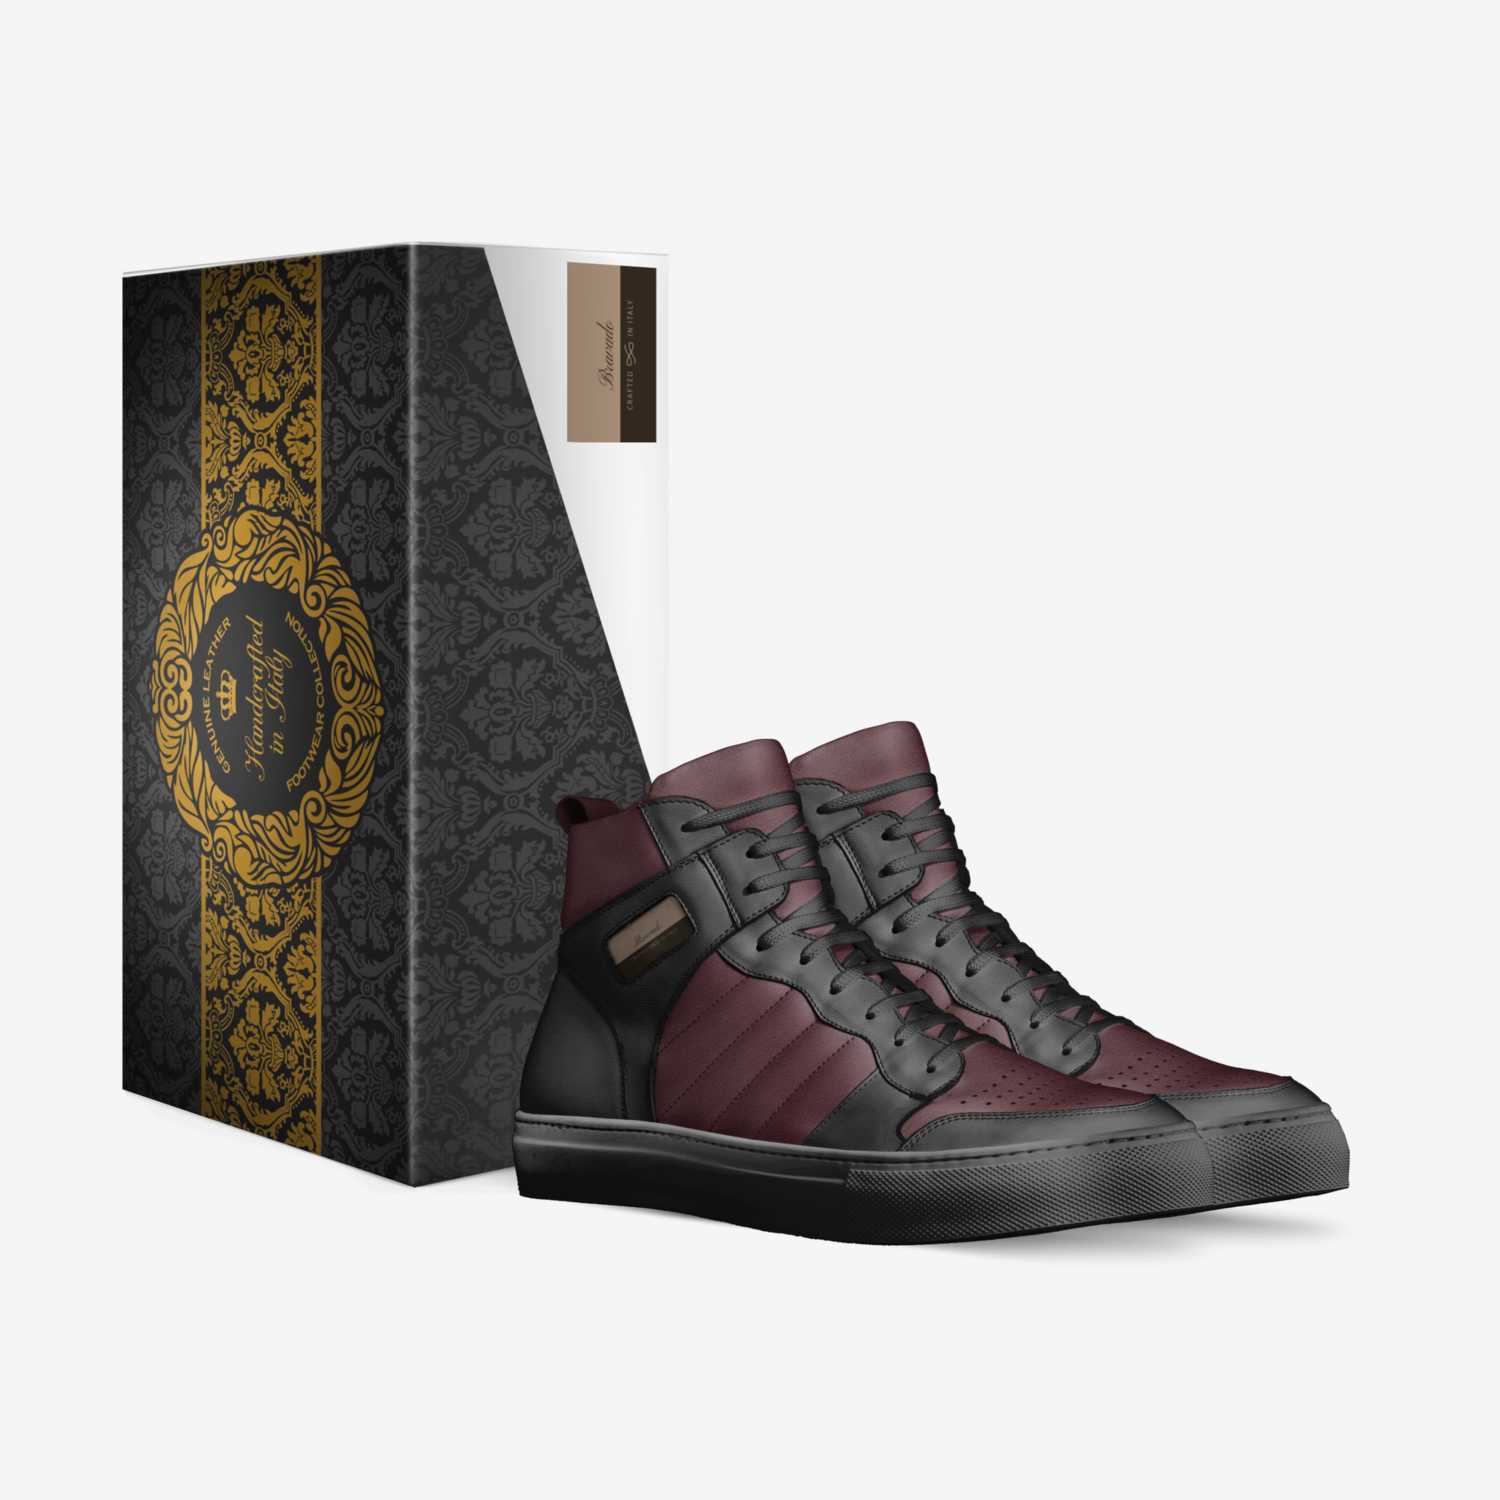 Bravado custom made in Italy shoes by Raymond Michael | Box view